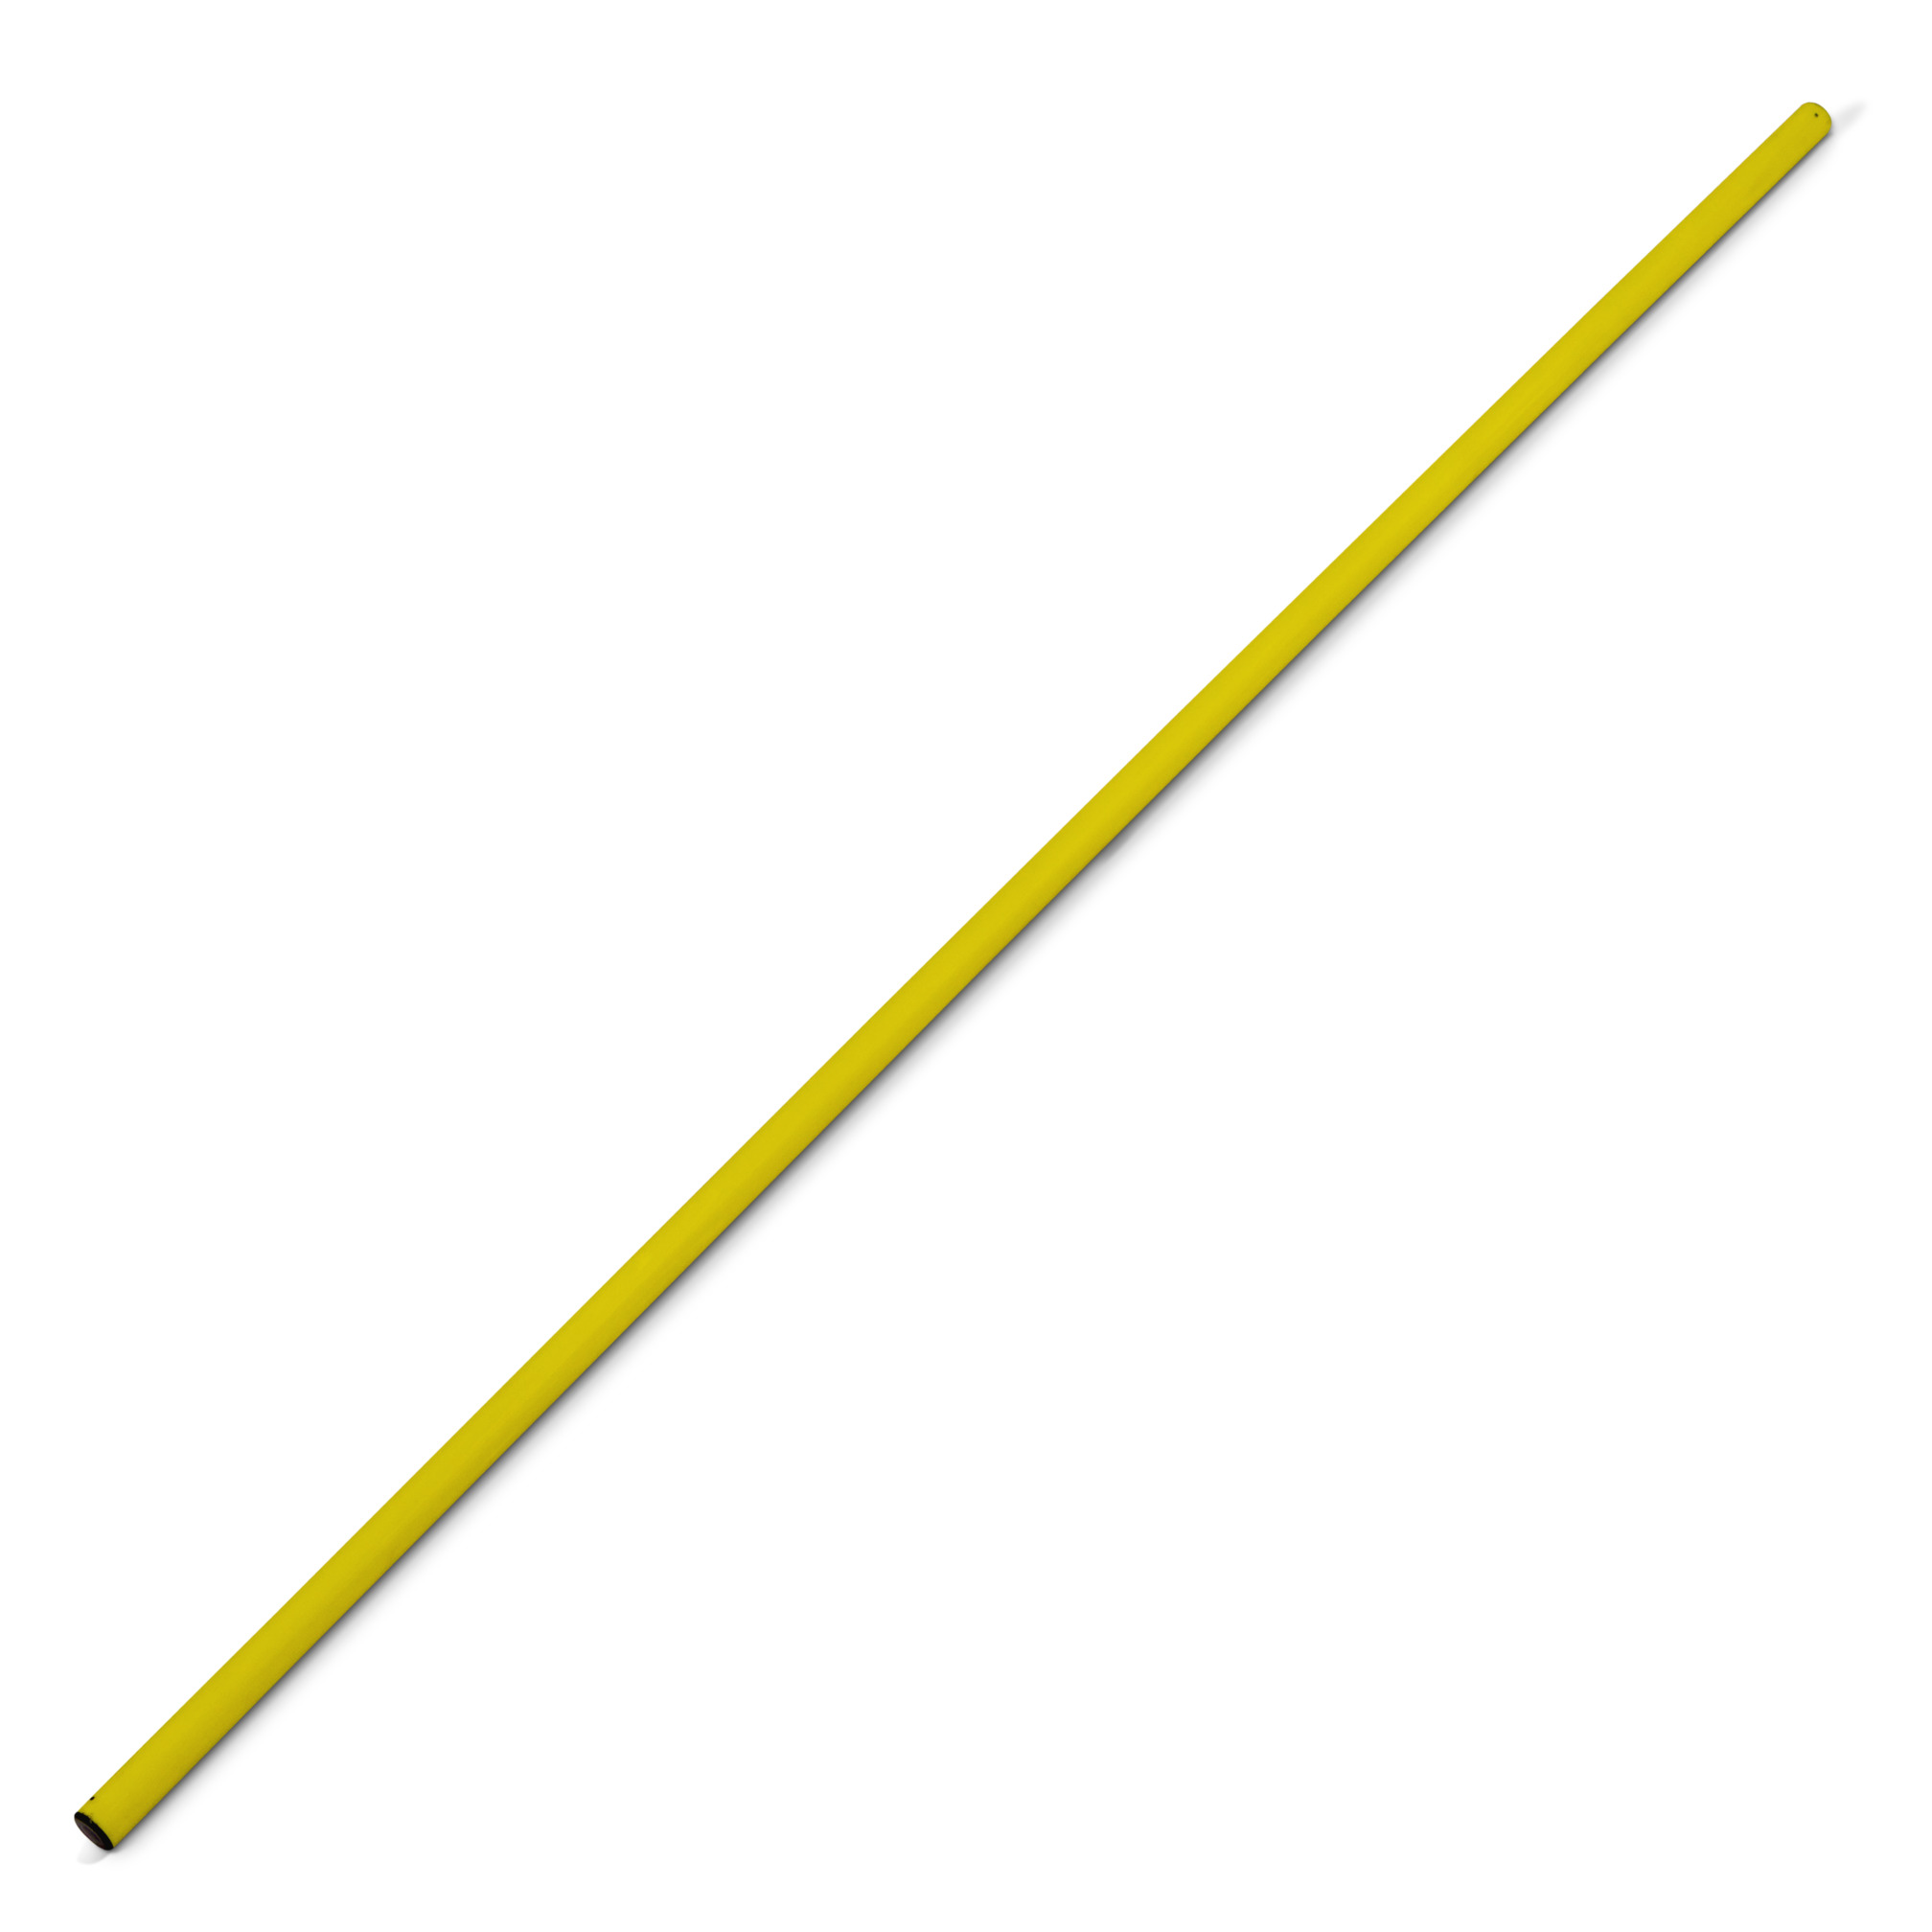 Combi pole, yellow